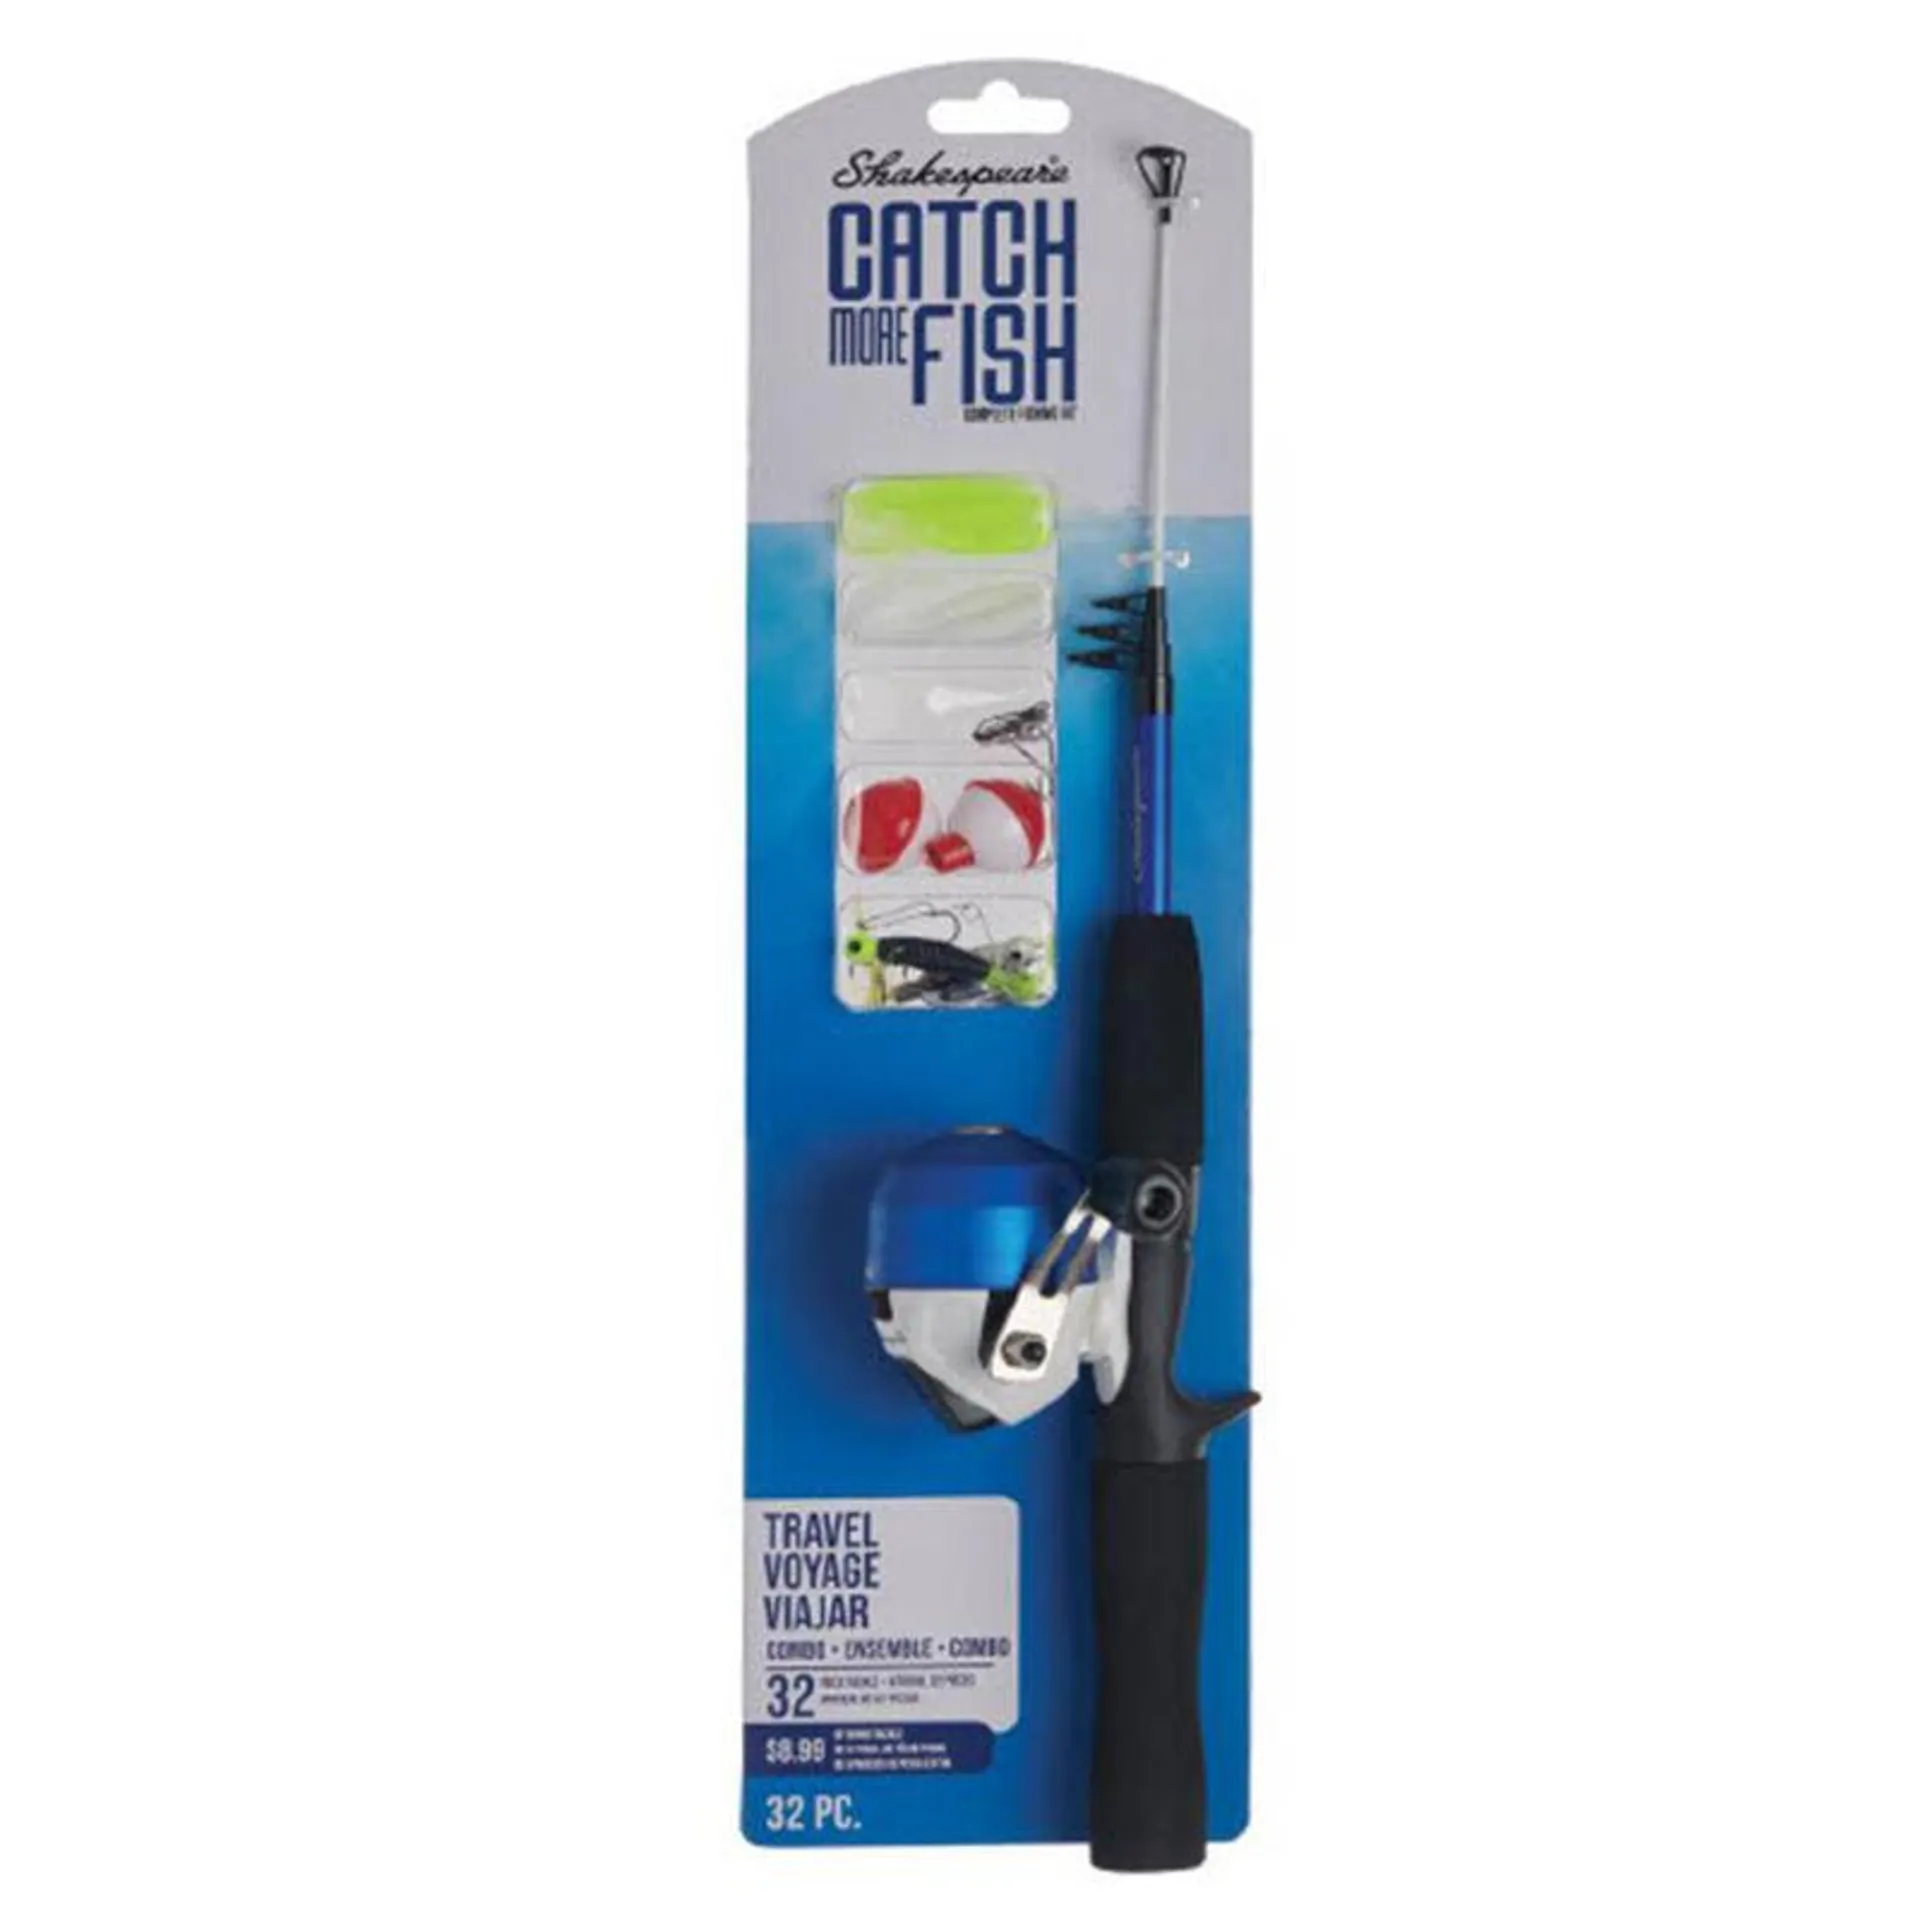 4'6" Catch More Fish Travel Telescoping Spincast Kit